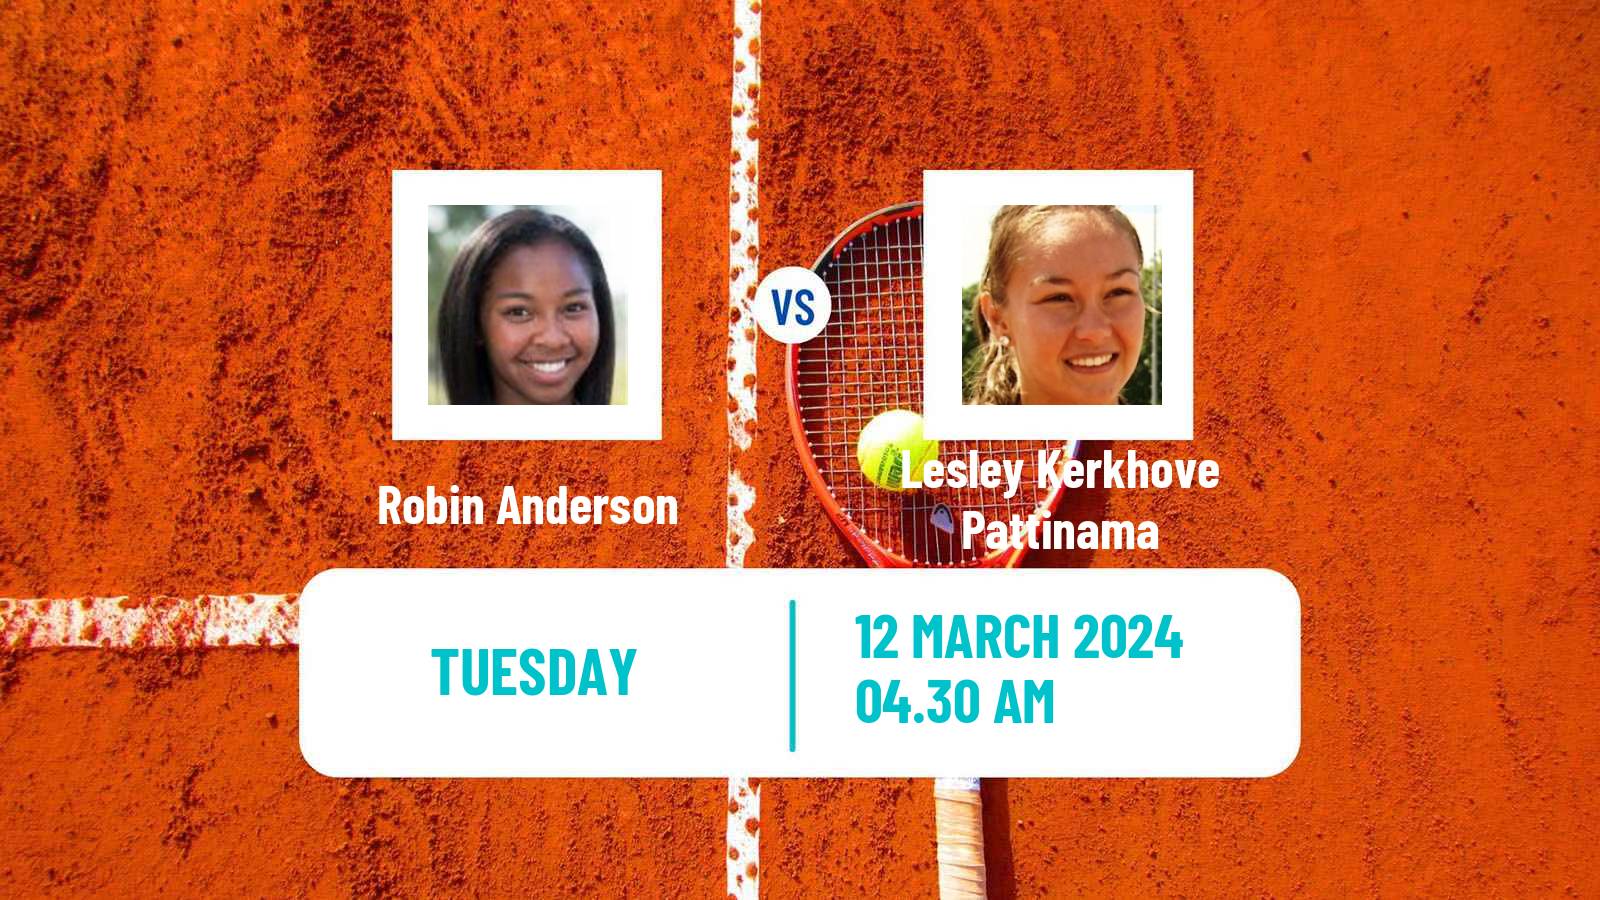 Tennis ITF W35 Solarino 2 Women Robin Anderson - Lesley Kerkhove Pattinama